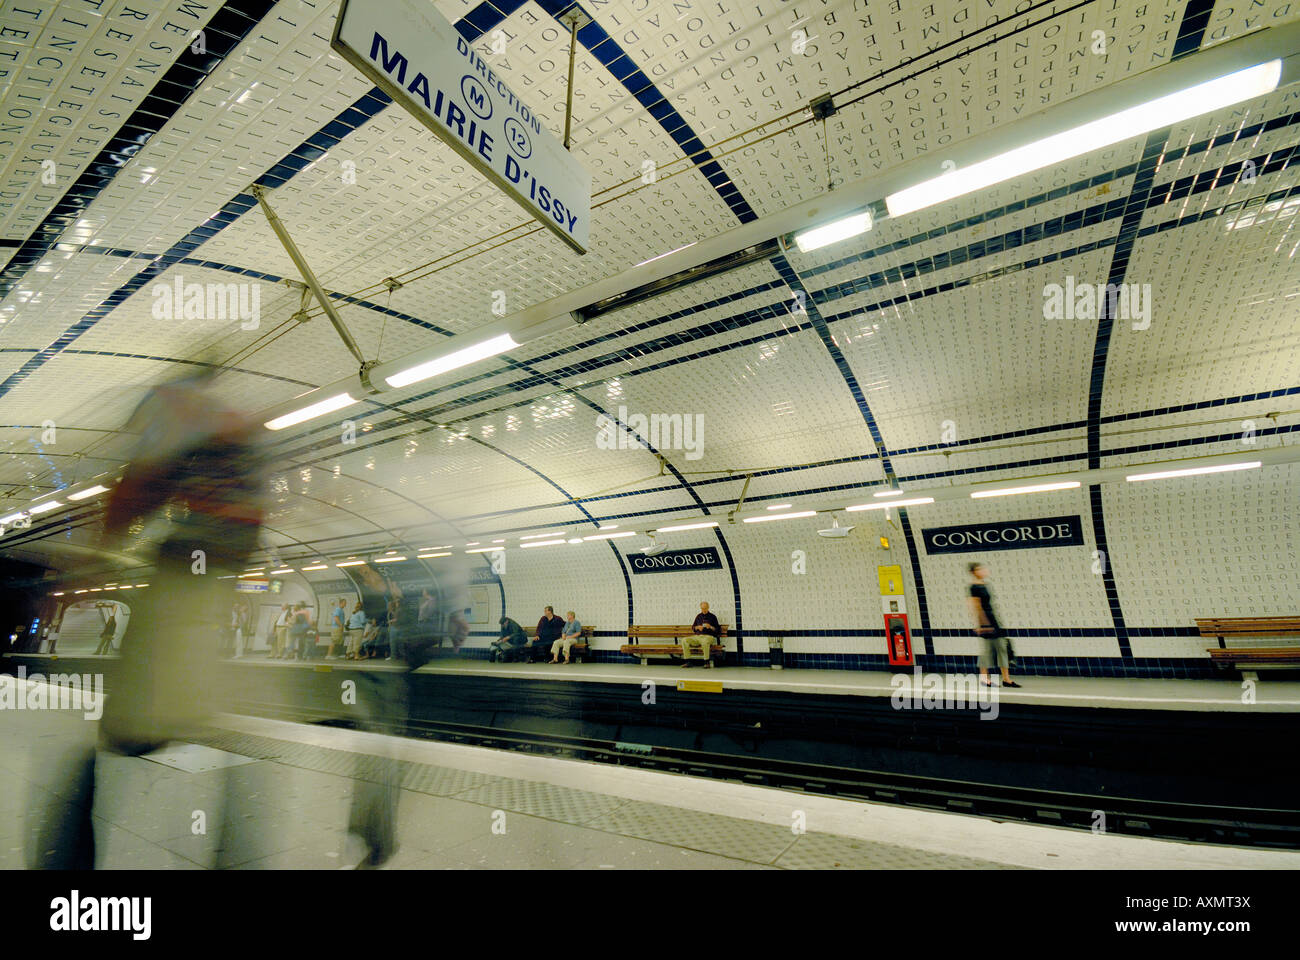 subway station of Concorde Paris France Stock Photo